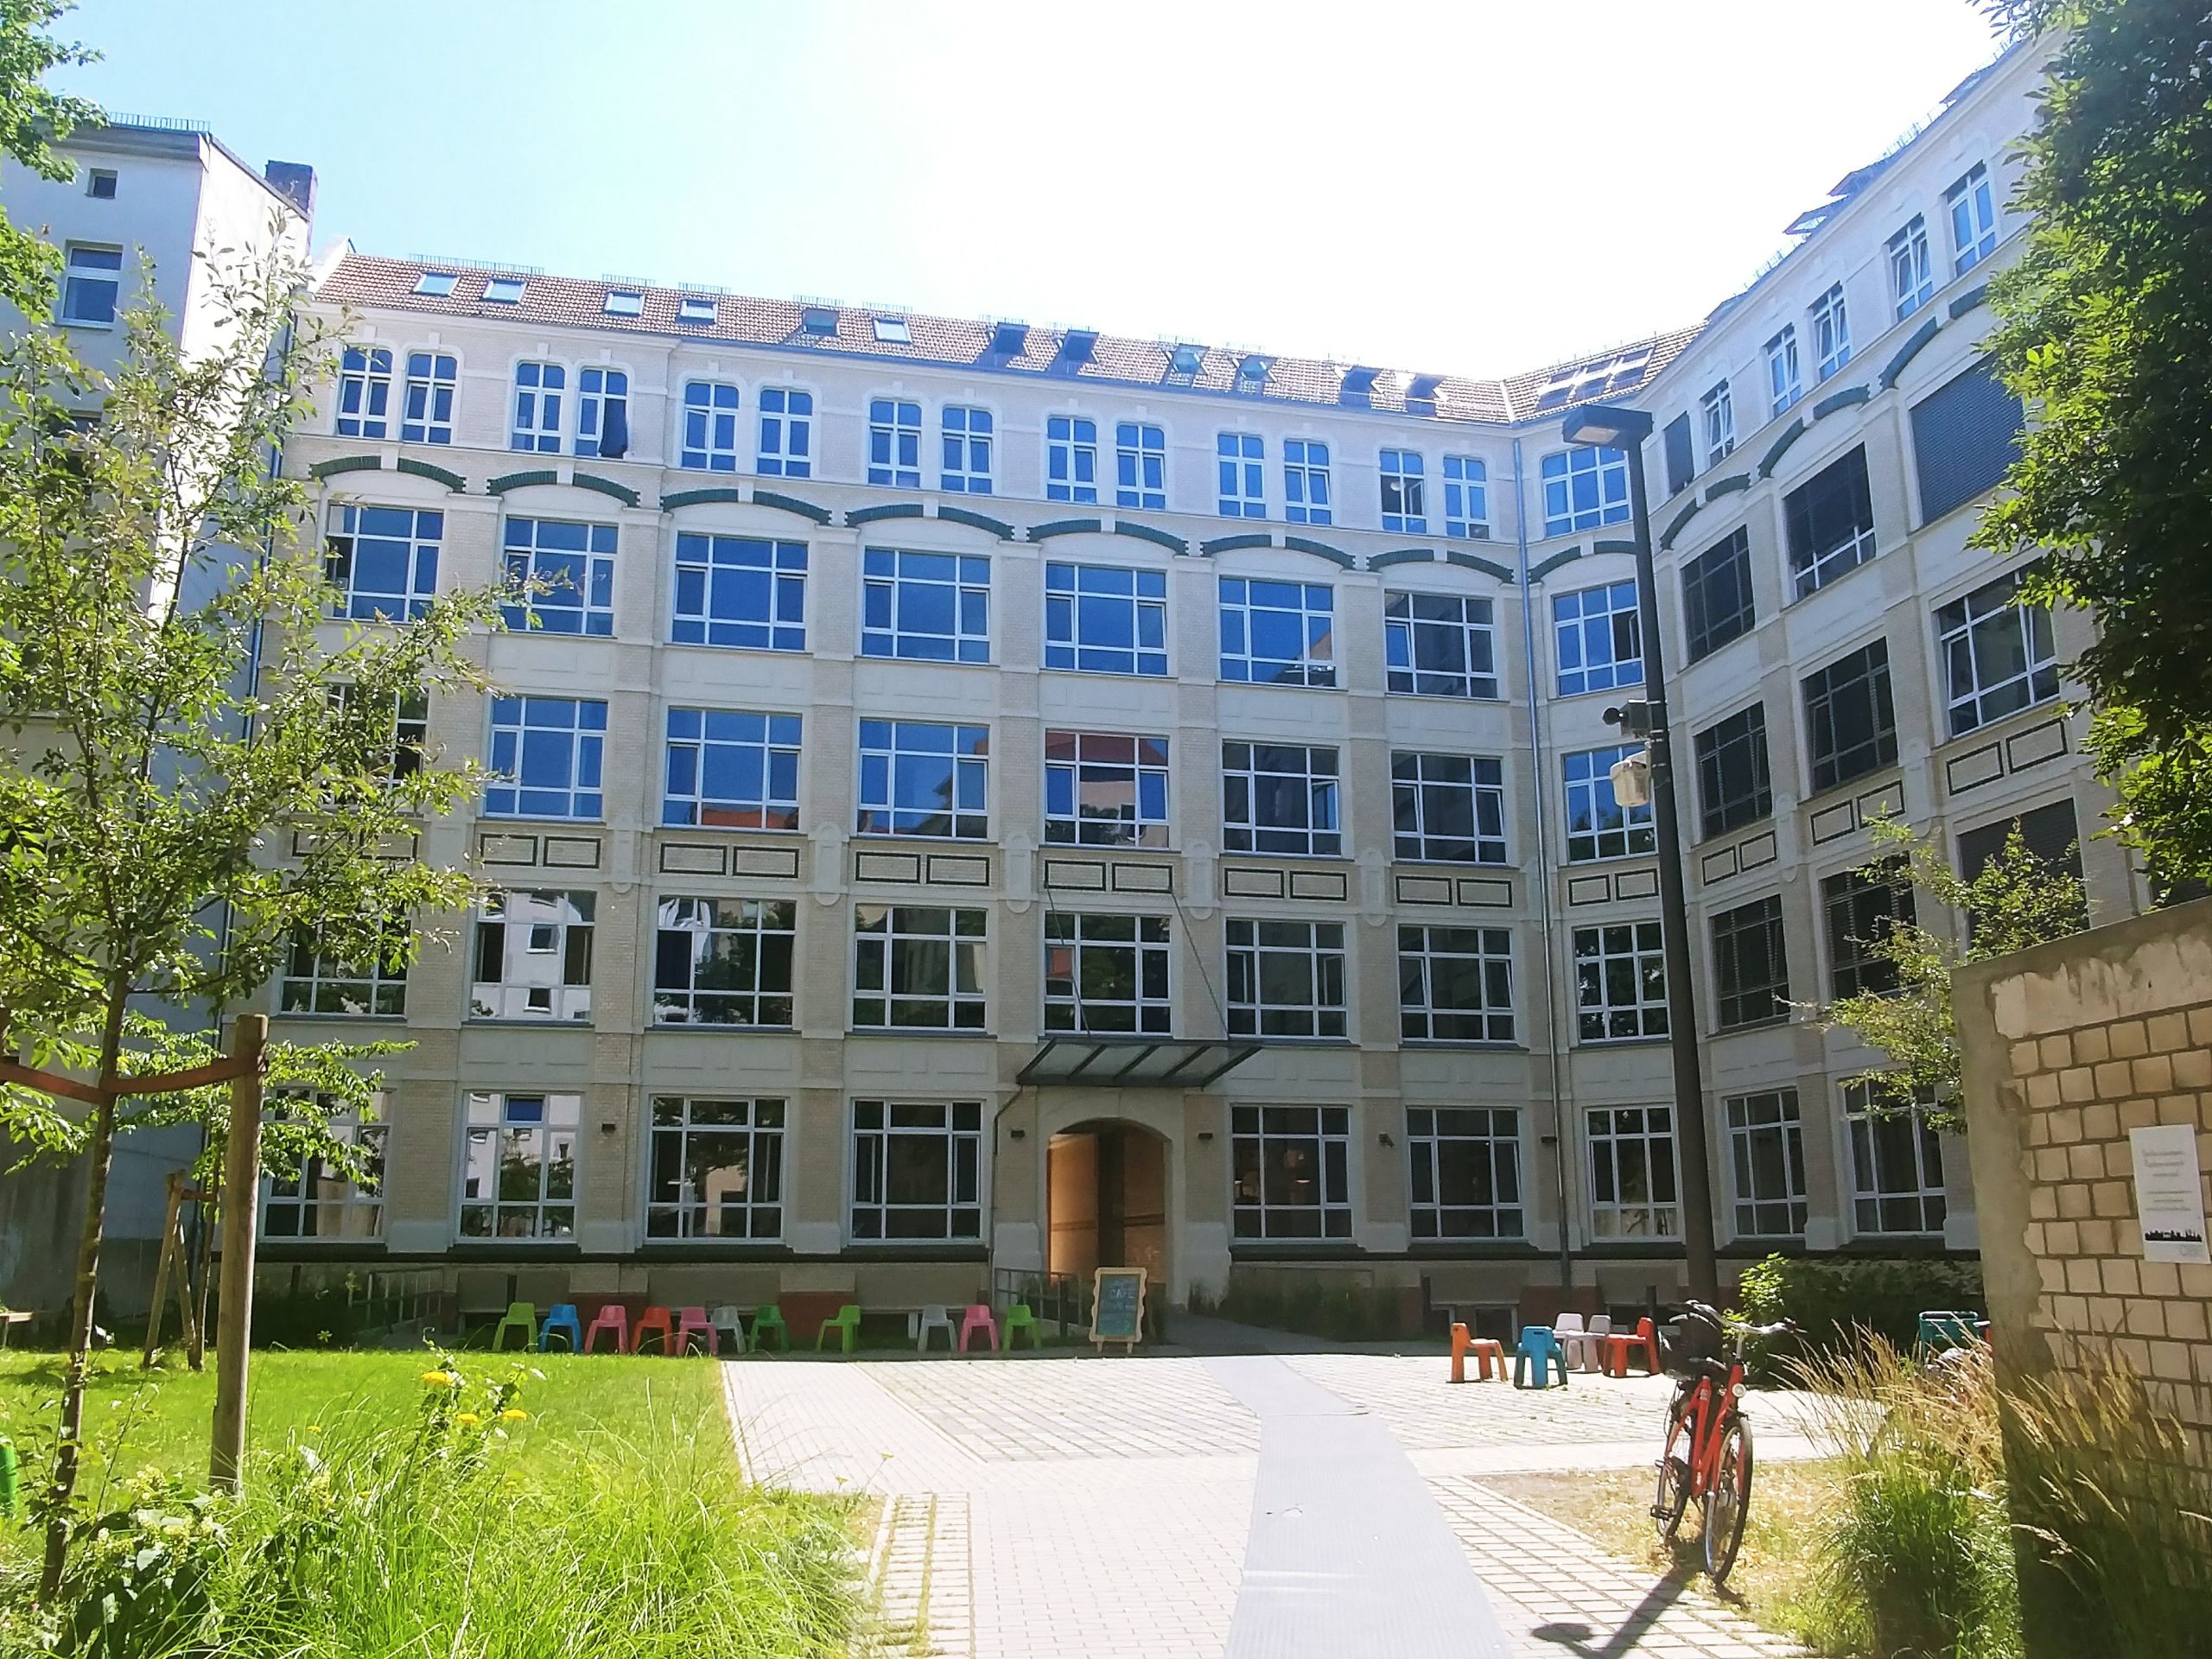 Englischer Garten Berlin Luxus Our First Few Days In Berlin High School Summer Abroad